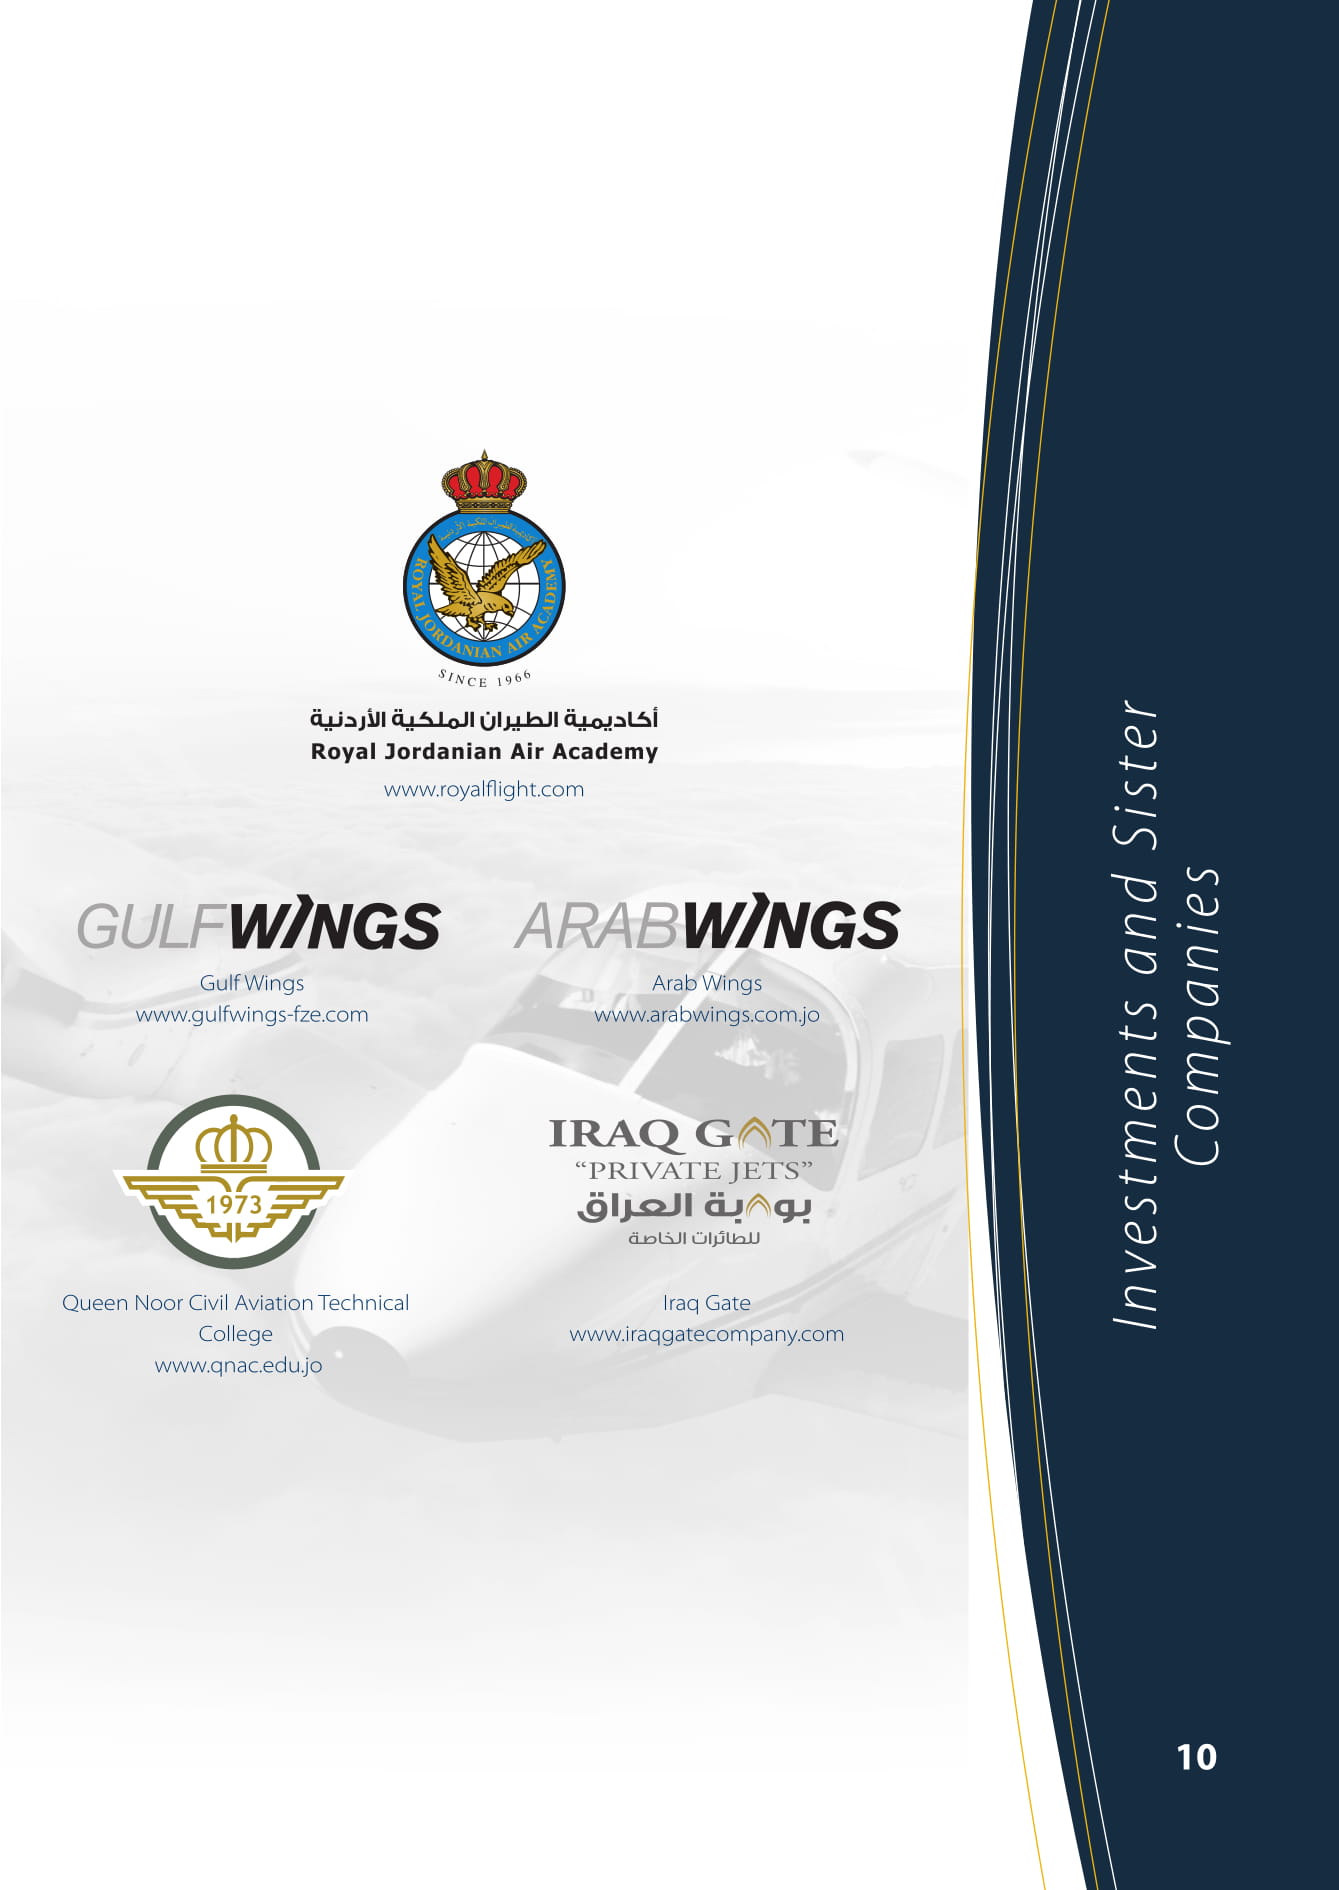 Royal Jordanian Air Academy | Academialeb